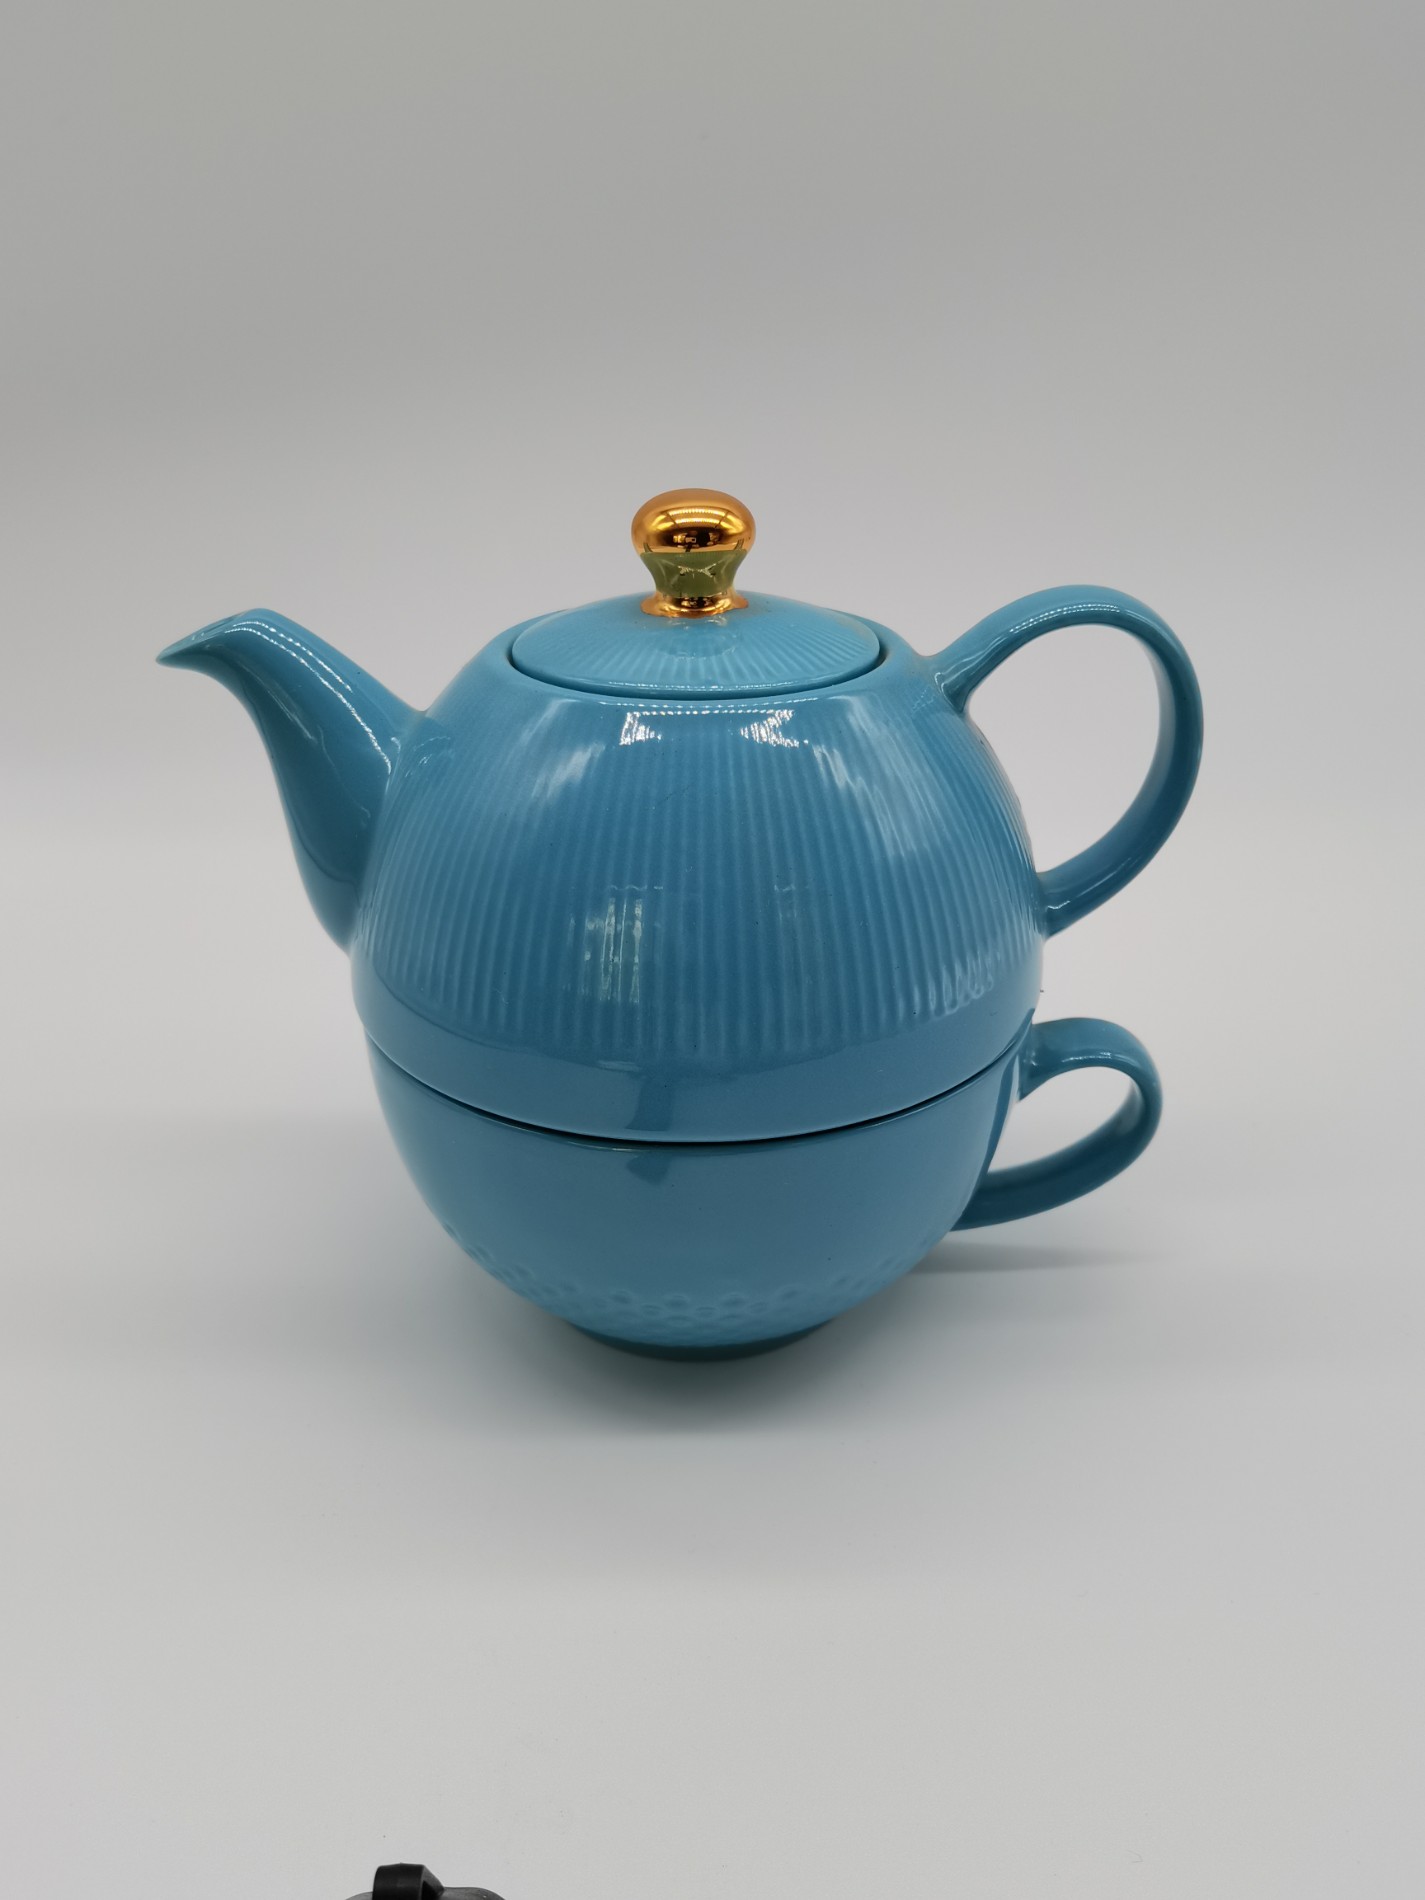 Heat Resistant Ceramic Teapot Manufacturers, Heat Resistant Ceramic Teapot Factory, Supply Heat Resistant Ceramic Teapot